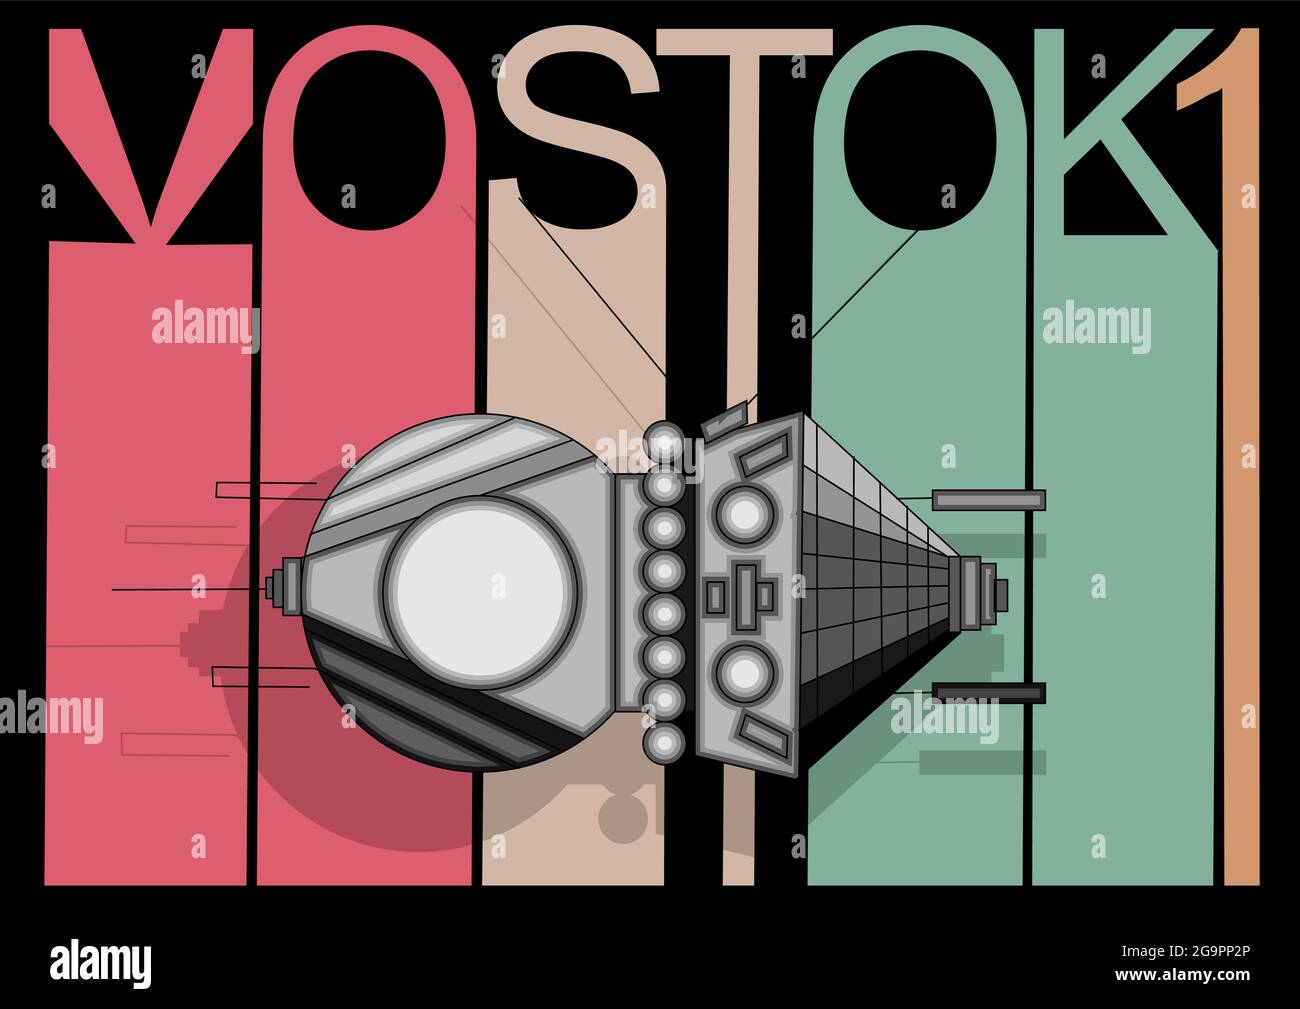 vostok 1 Poster, Satellit von unione sovetica Stock Vektor